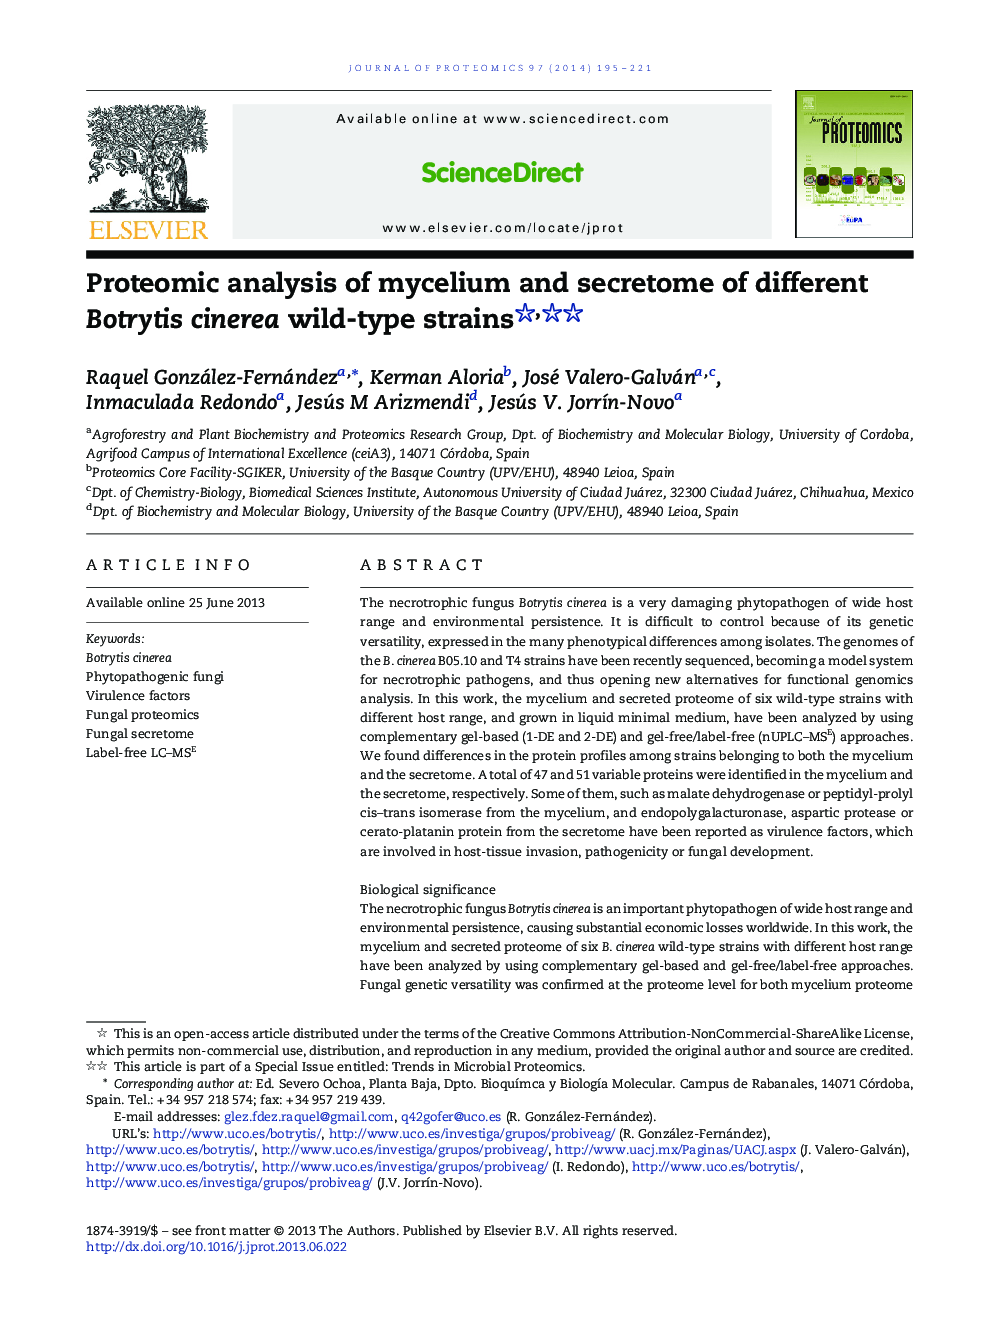 Proteomic analysis of mycelium and secretome of different Botrytis cinerea wild-type strains